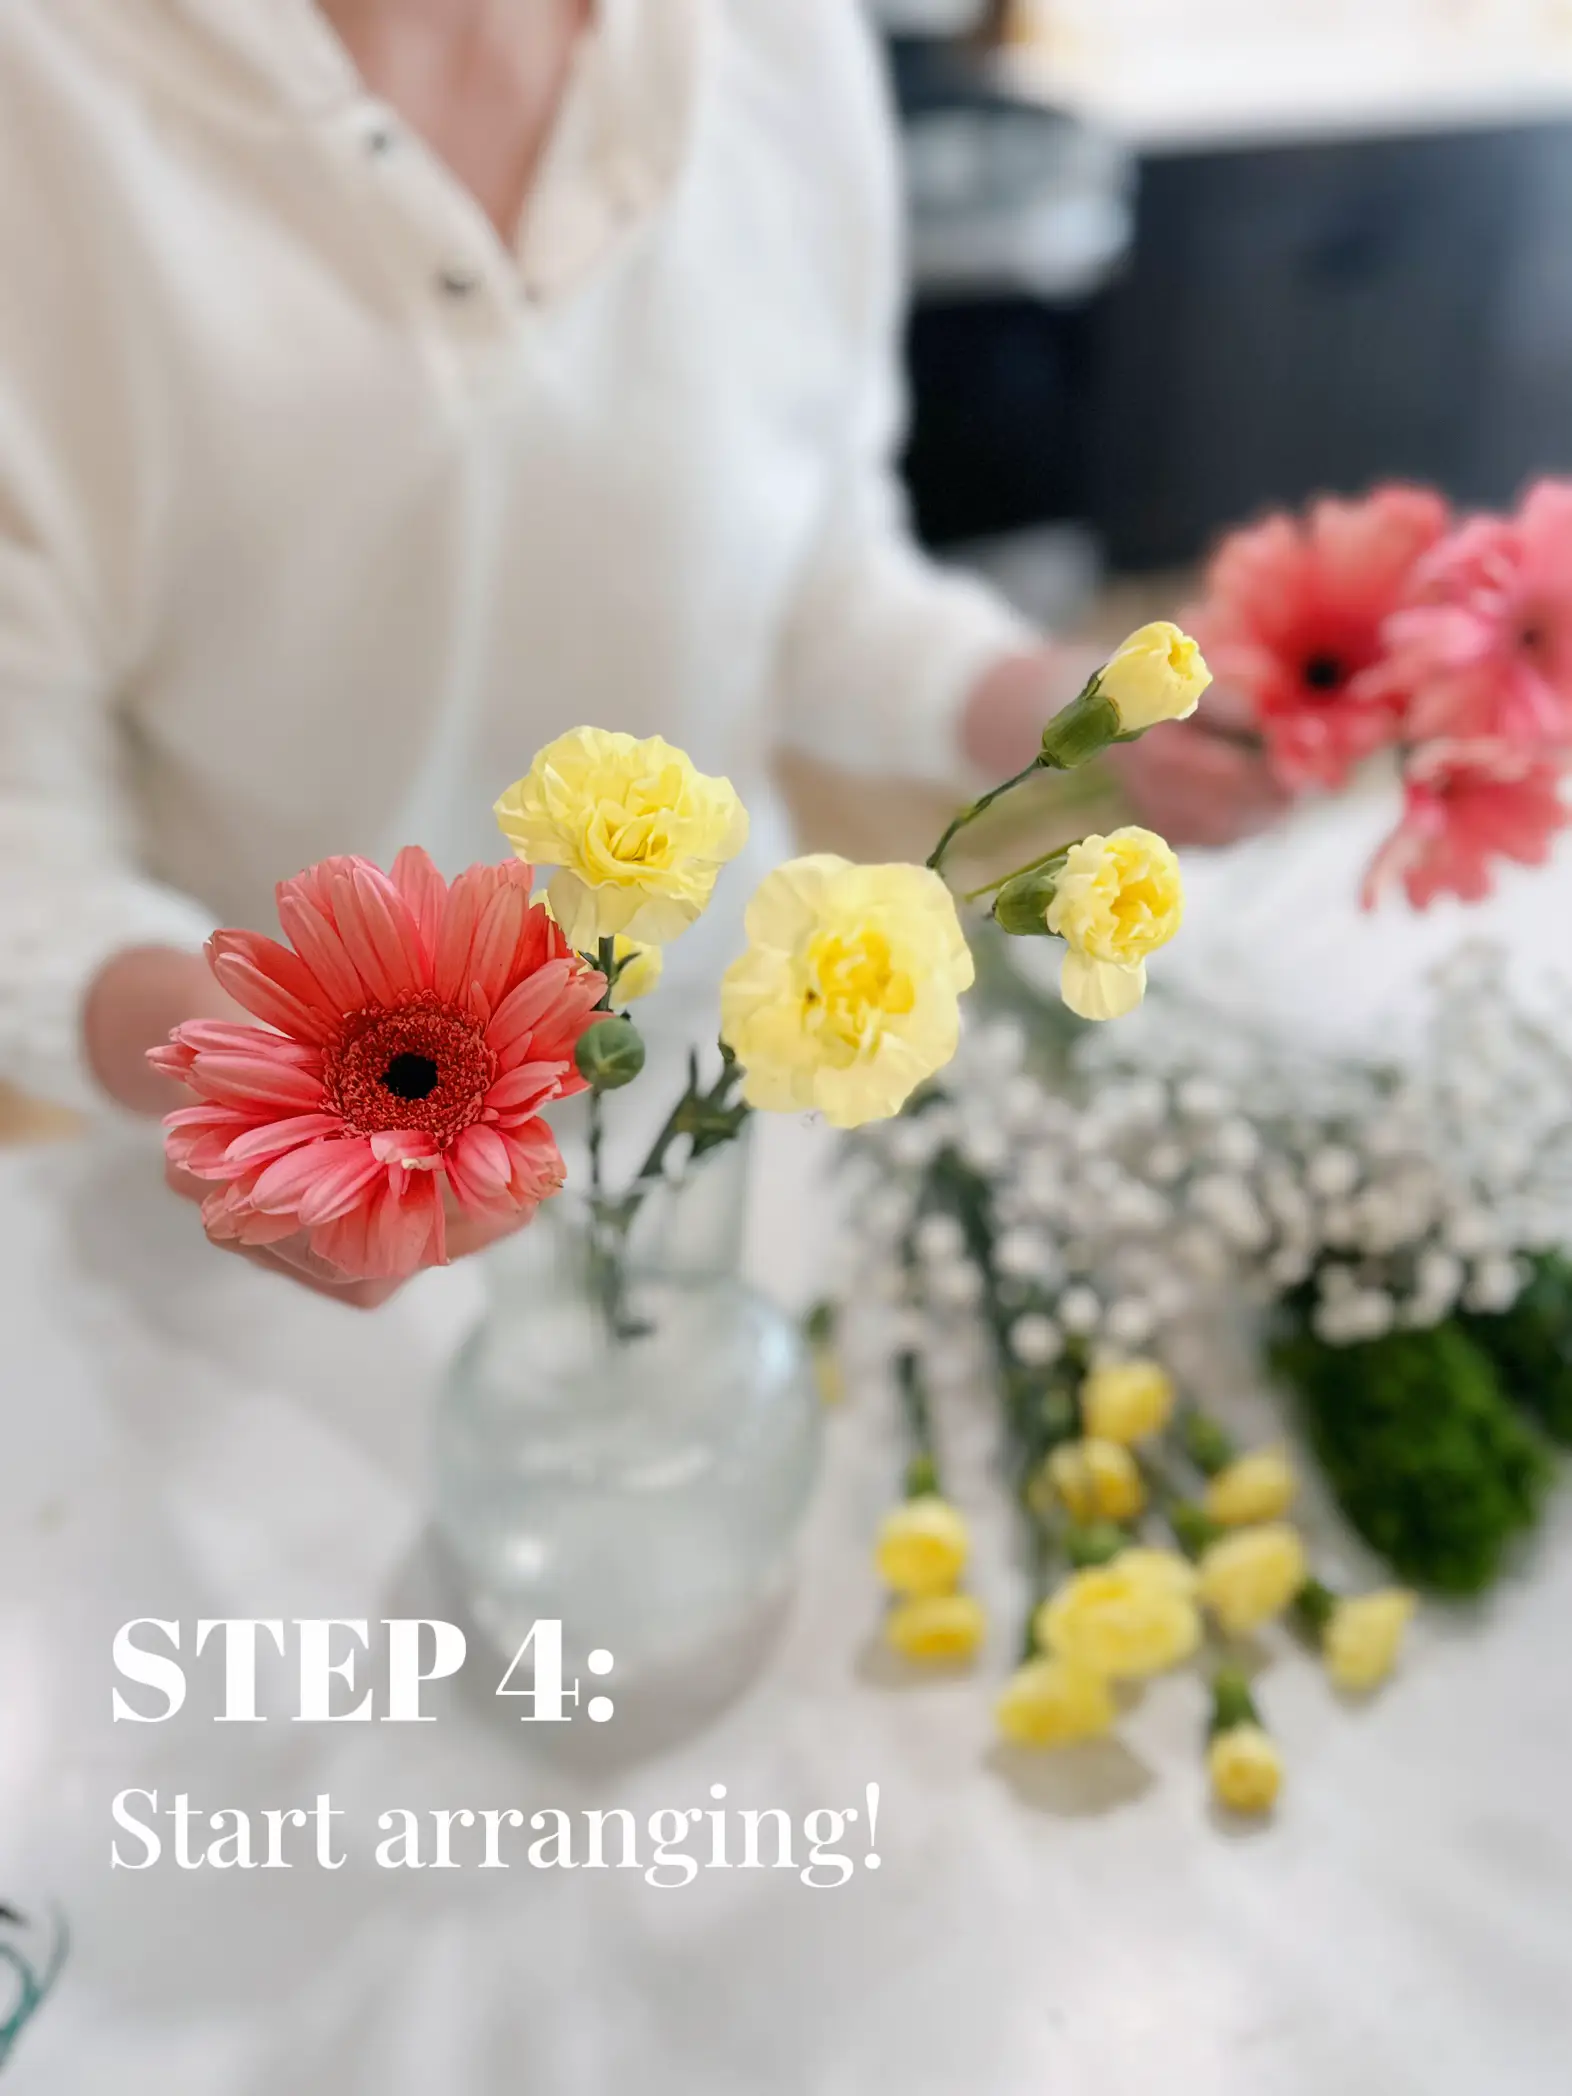 Floral Design Tips for Beginners